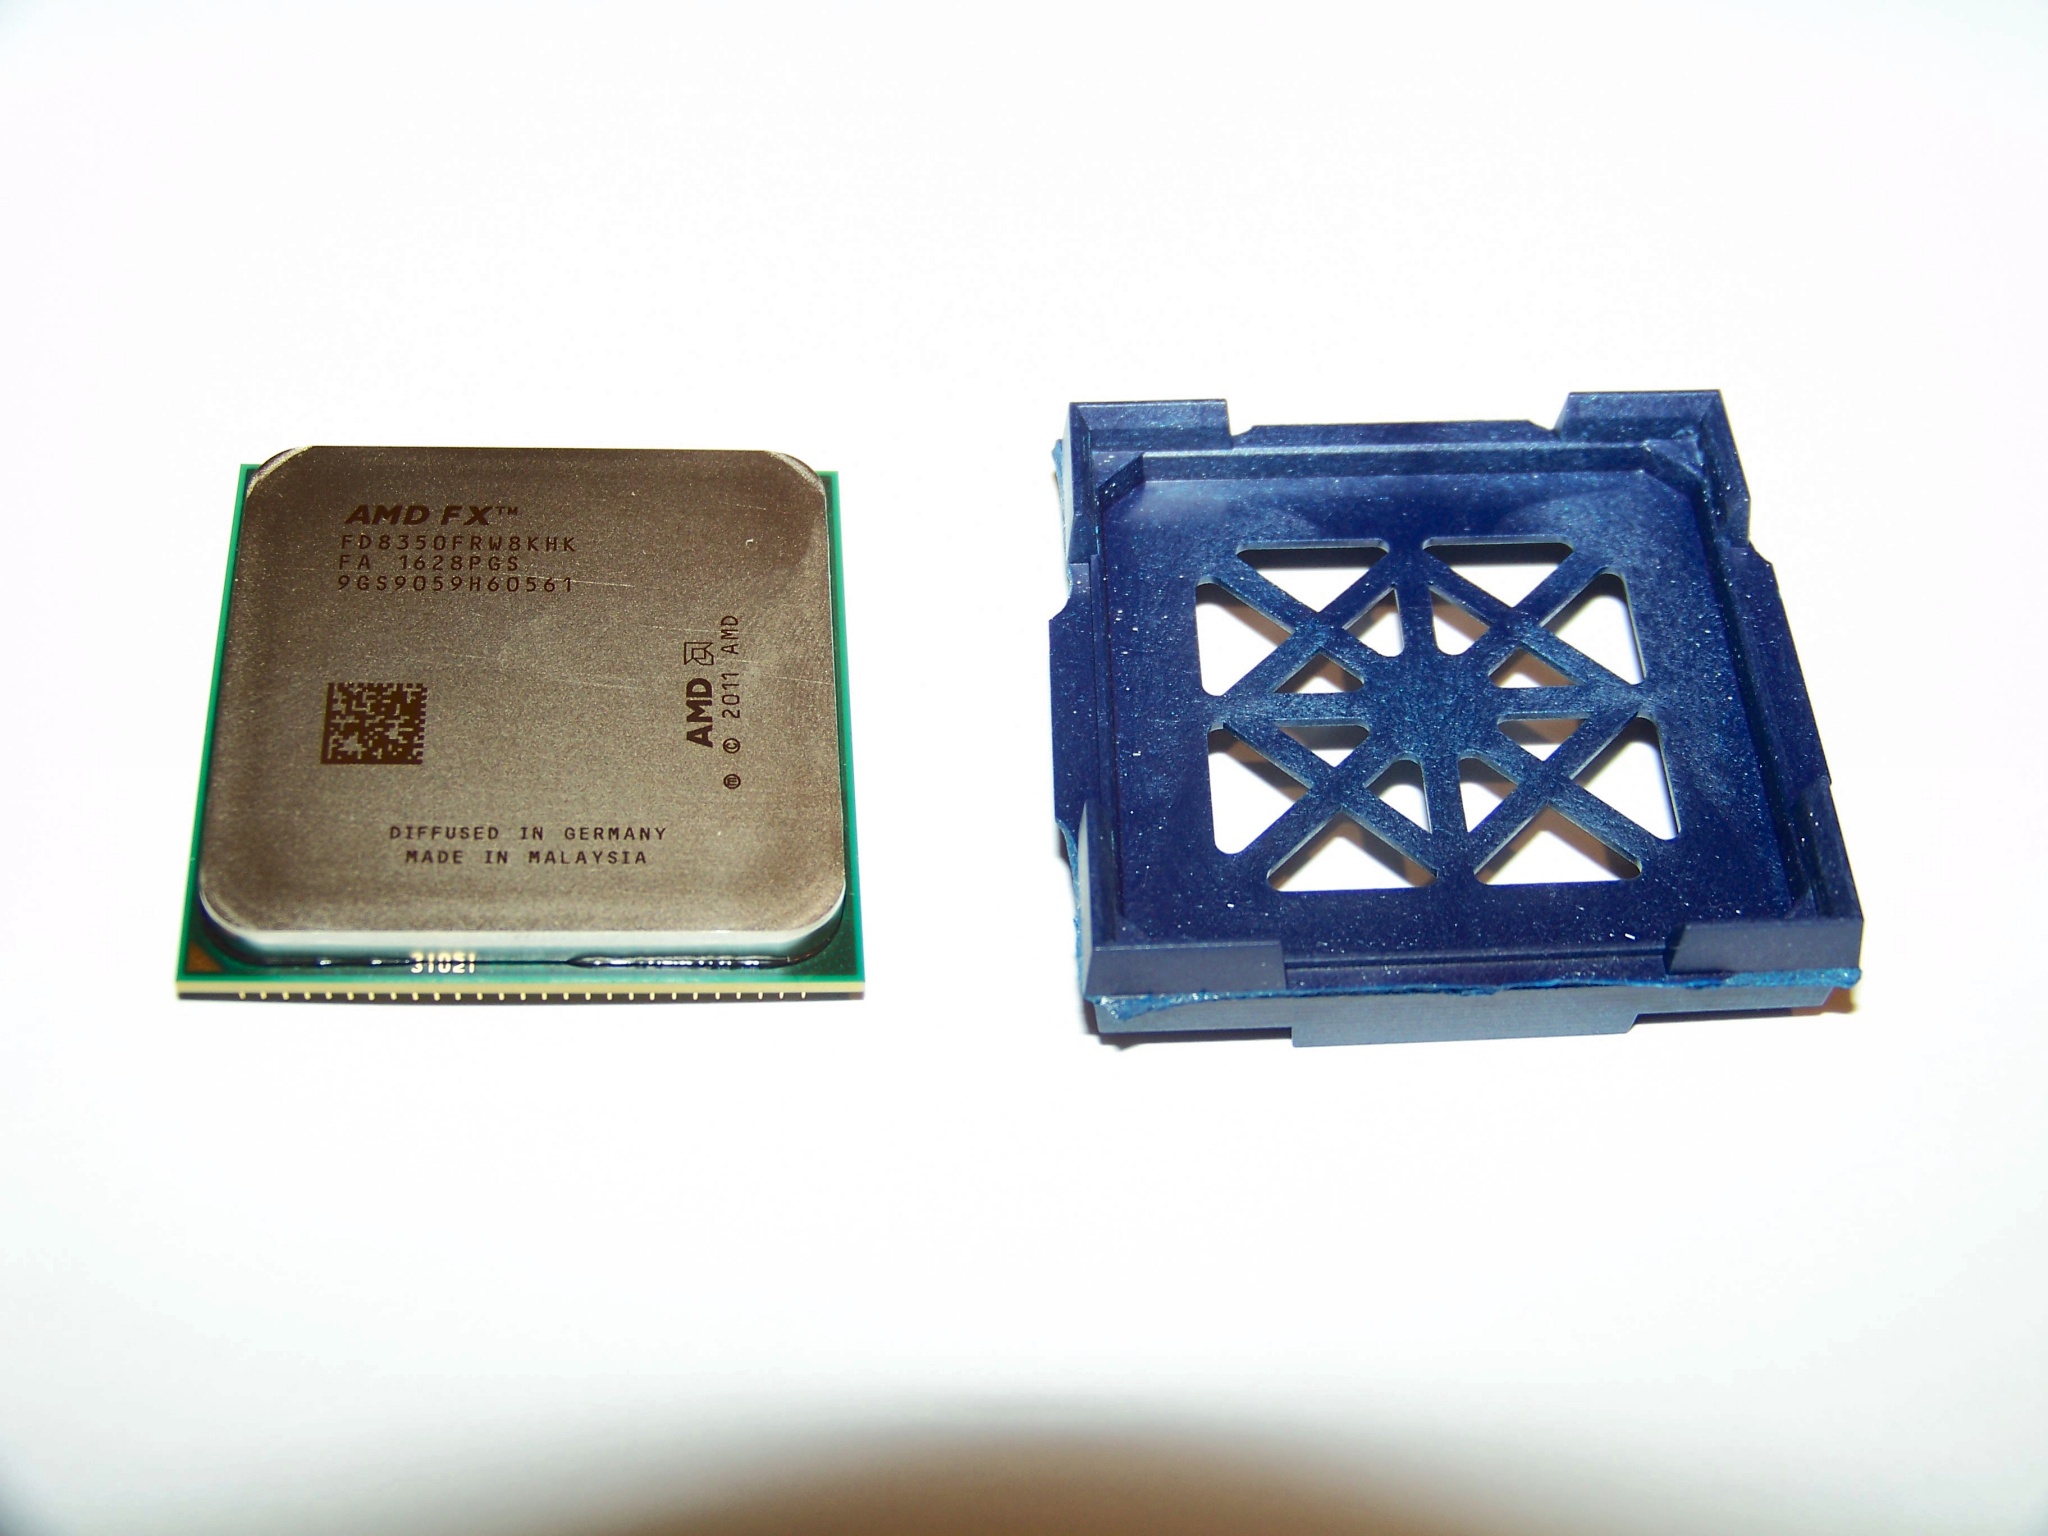 Процессор AMD FX-8350, OEM. Процессор AMD FX-8350 Vishera. Процессор АМД ФХ 8350 ОЕМ. Процессор AMD FX TM 8350 eight-Core Processor. Amd fx 8350 цена